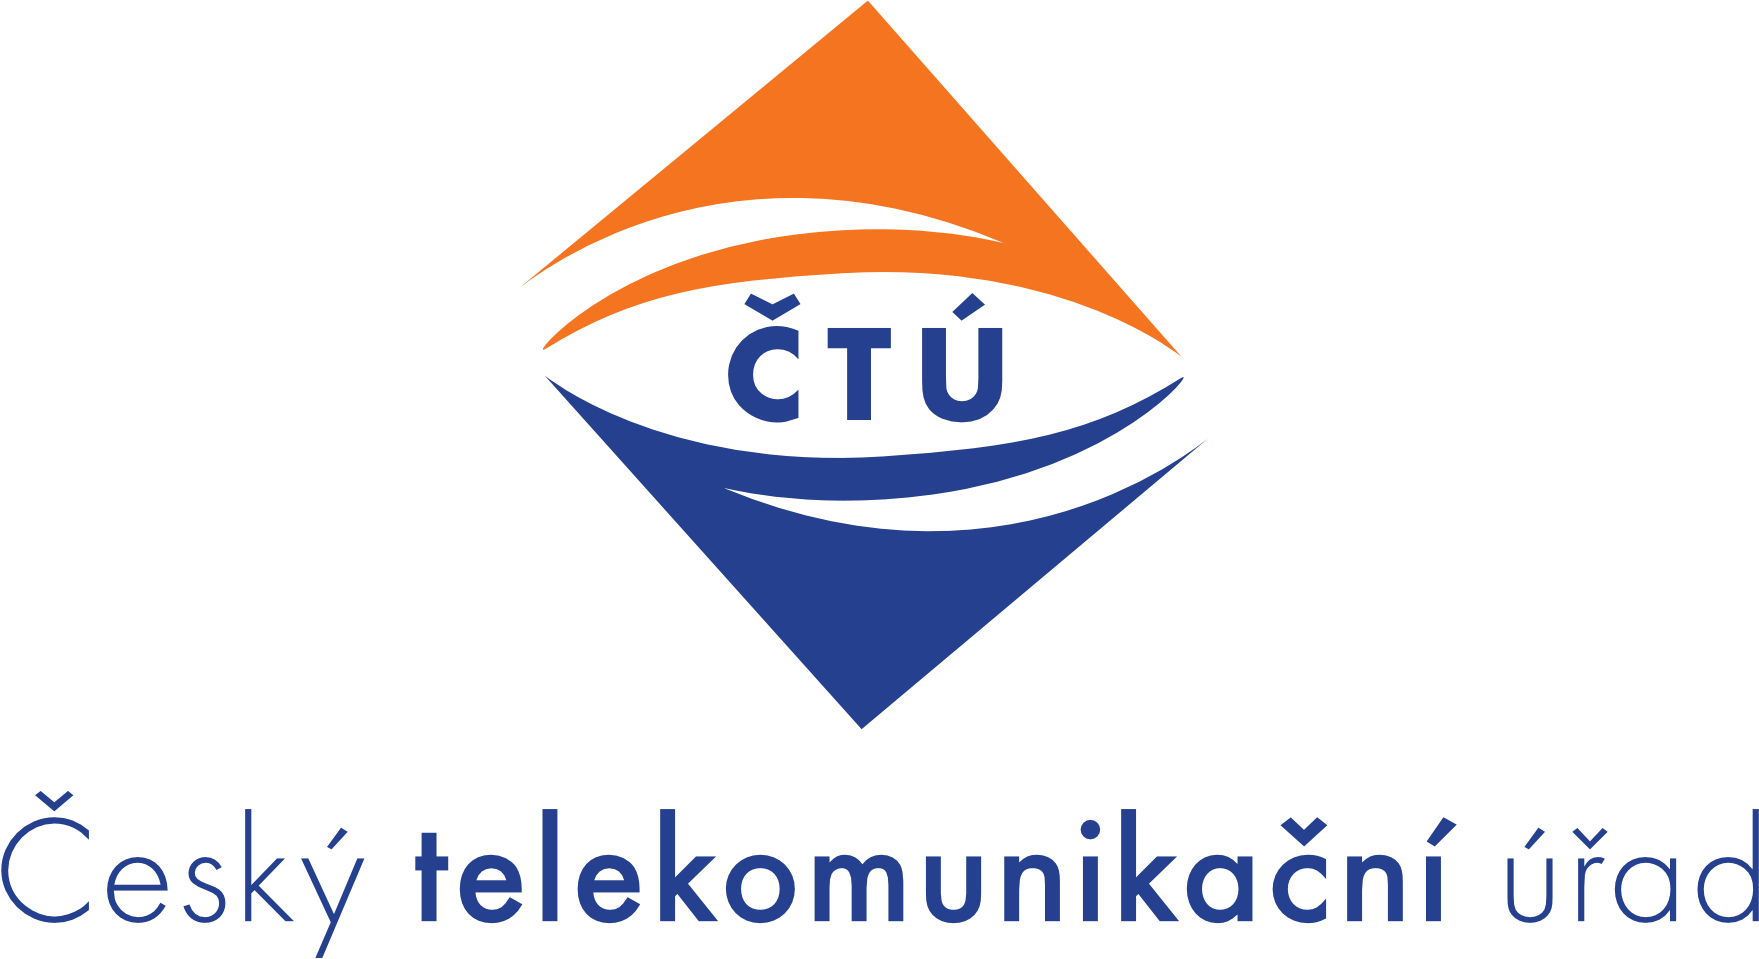 The image shows the CTU logoCzech Republic